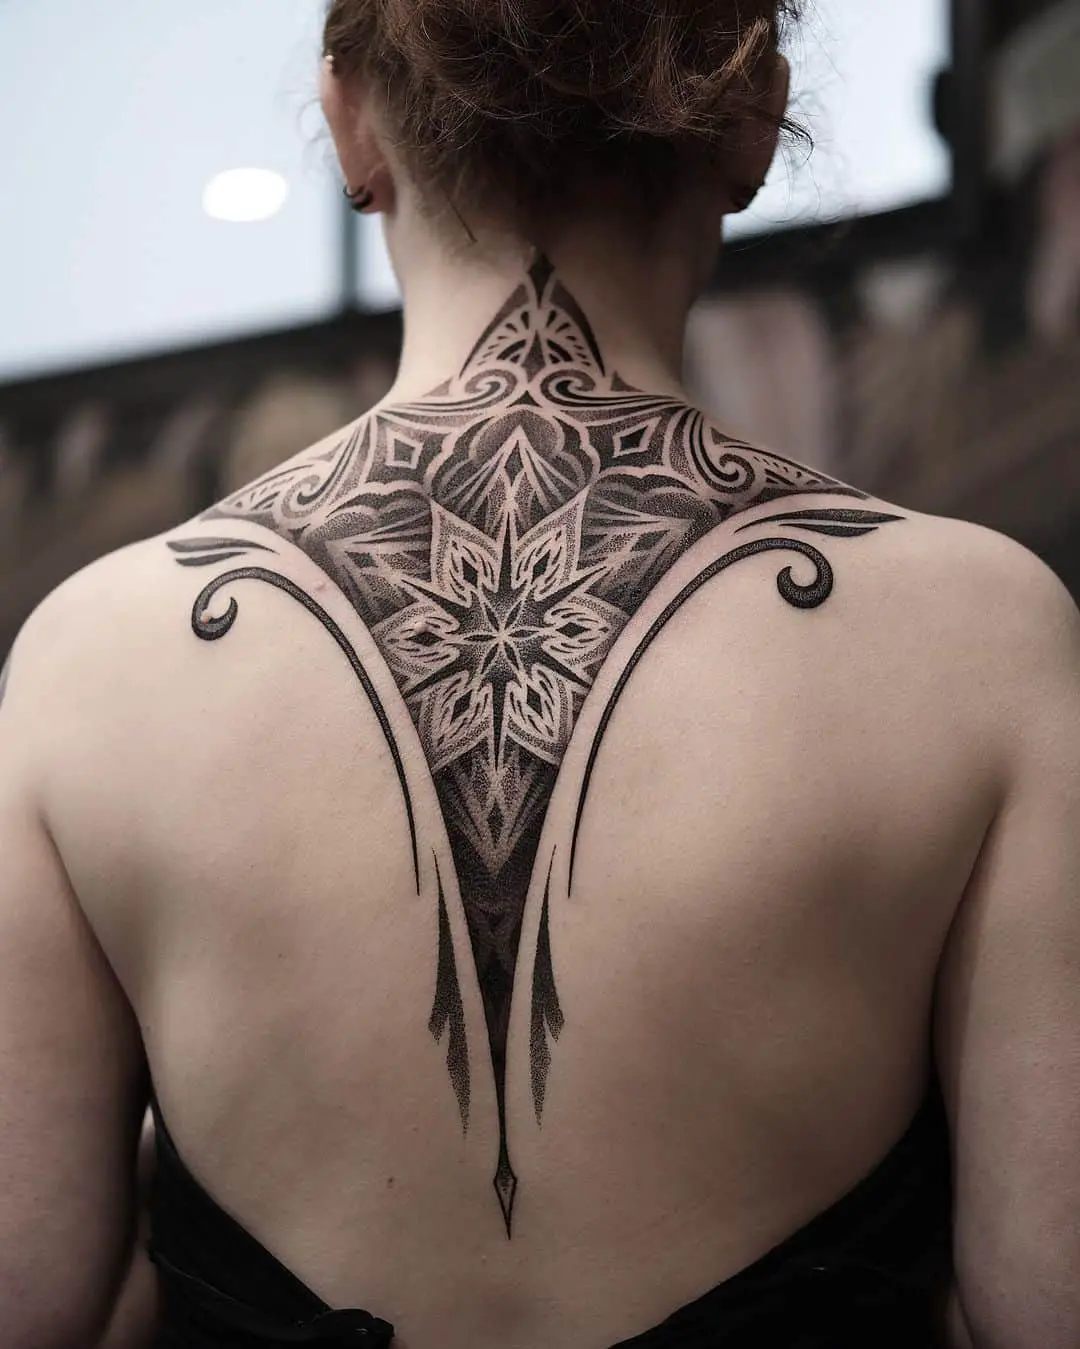 Amazing geometric tattoo on back by liris.ink